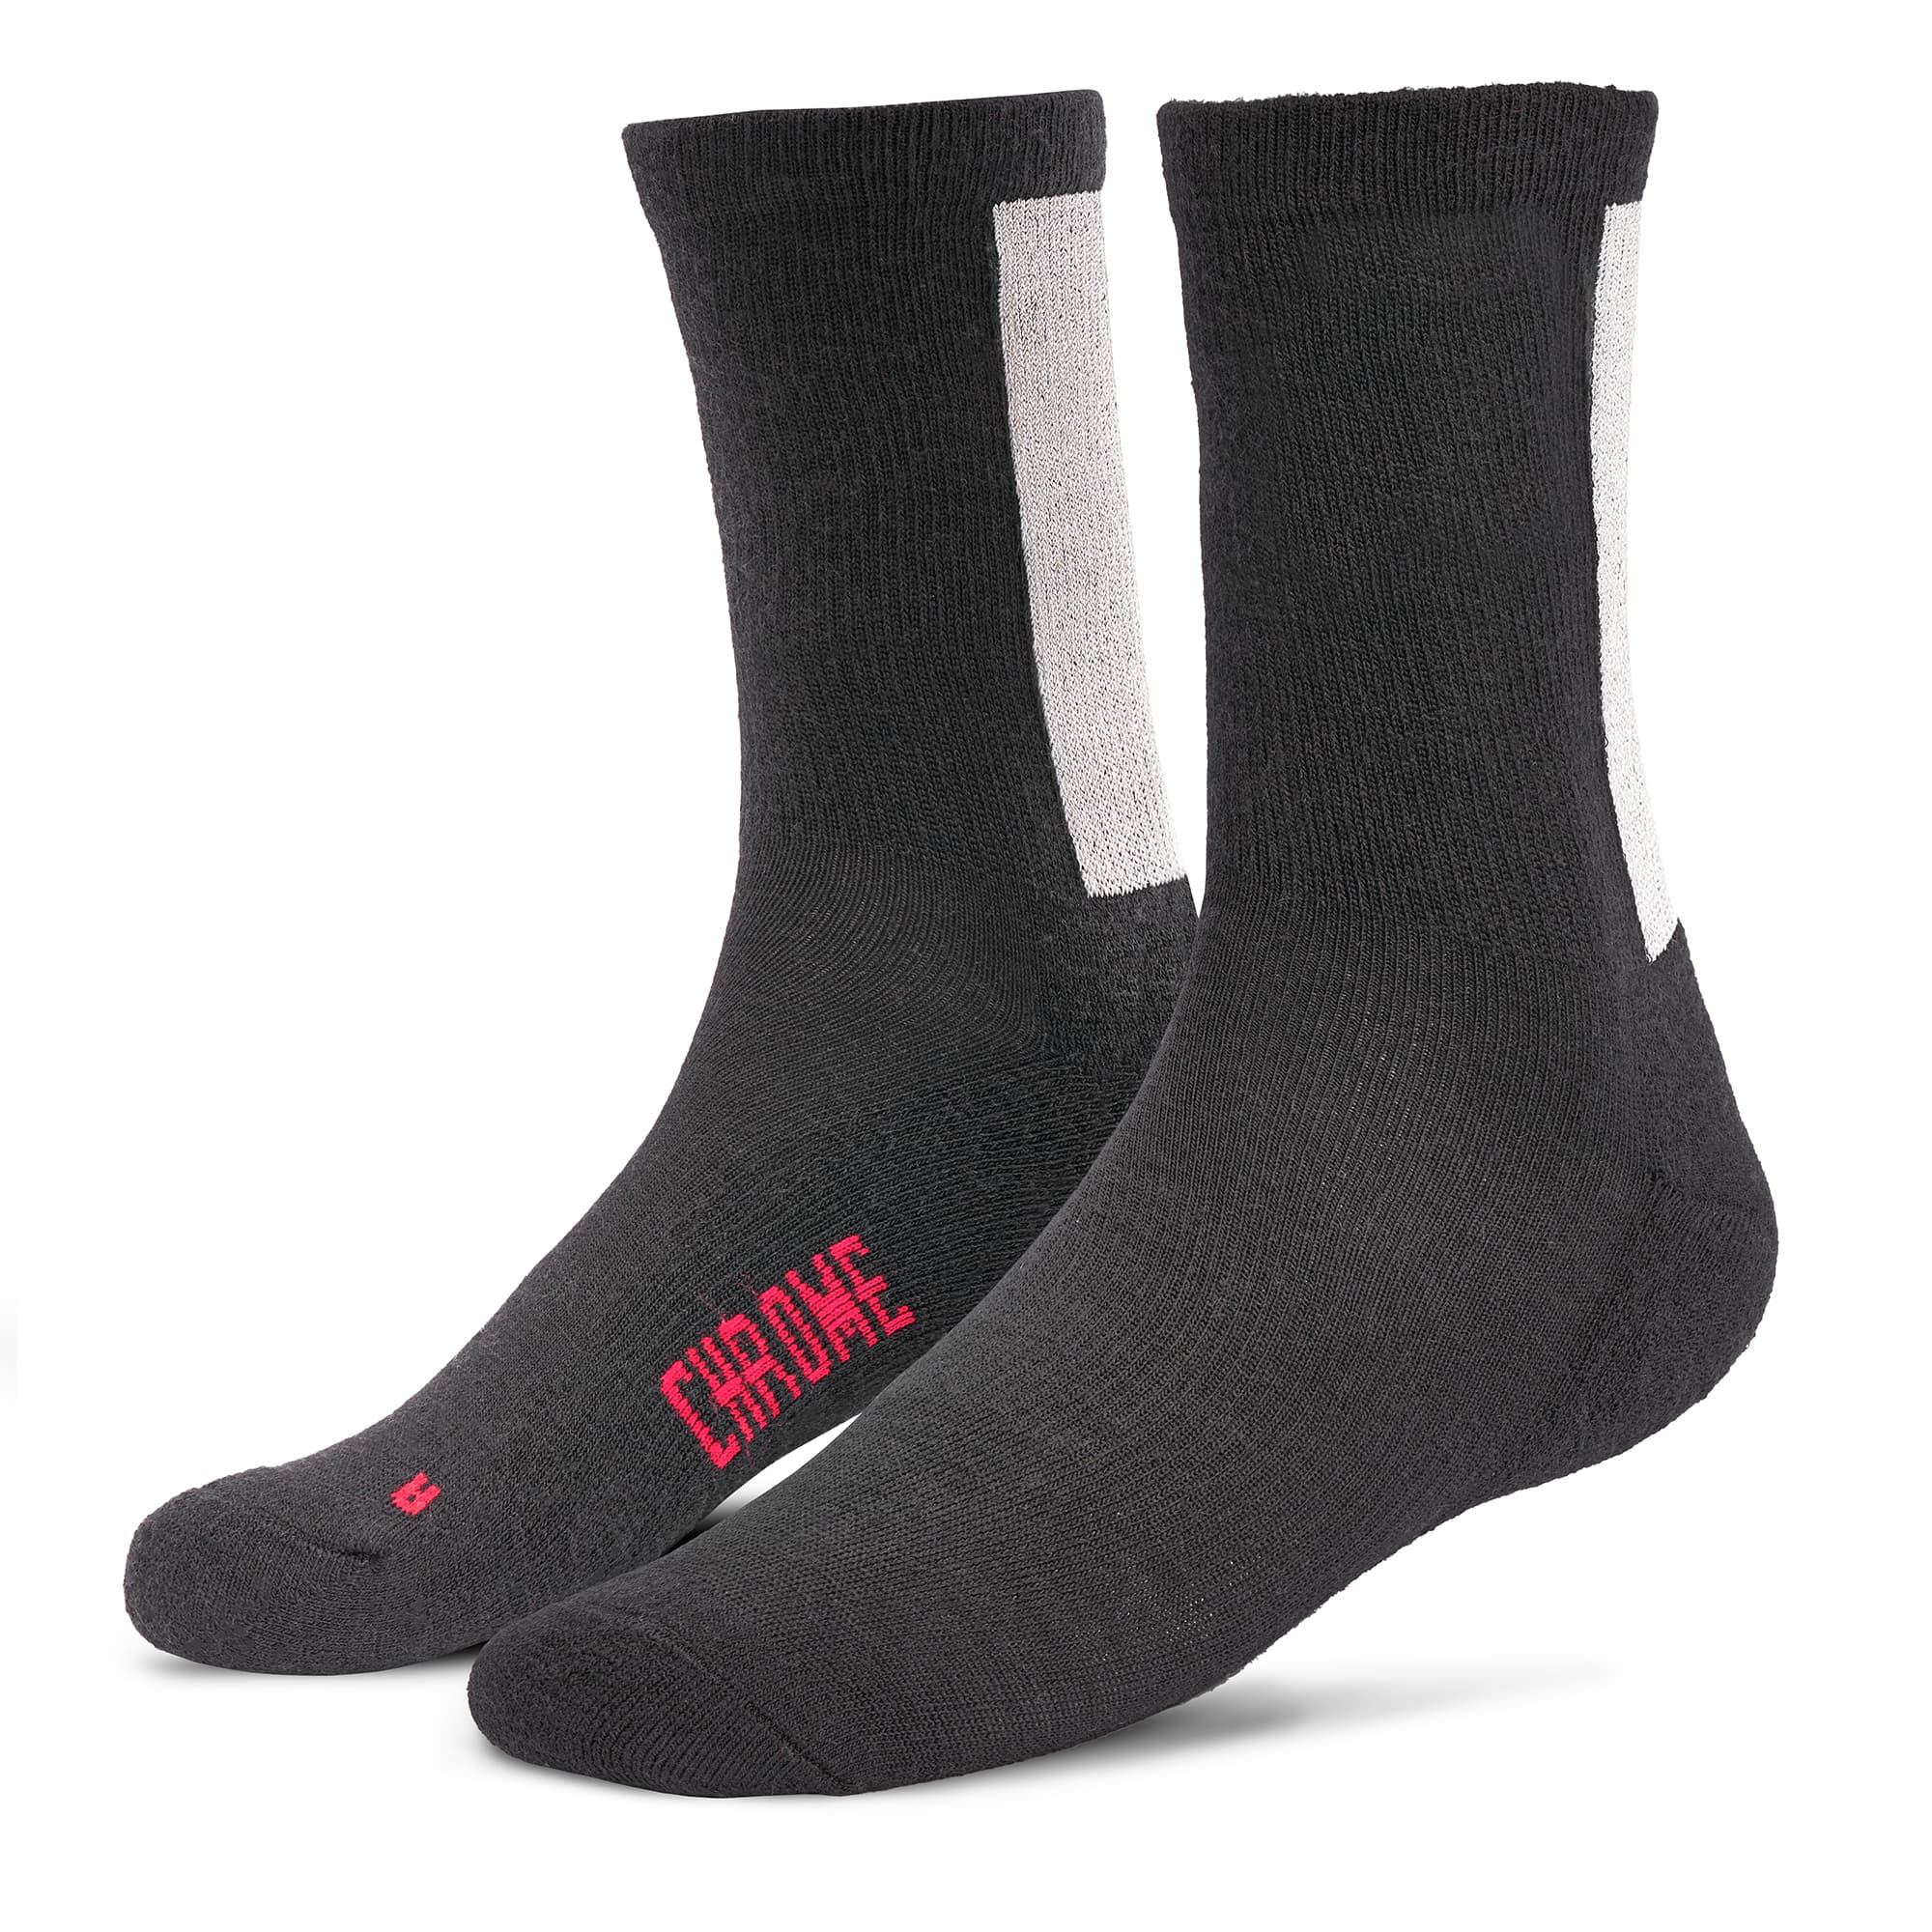 Merino Wool reflective sock